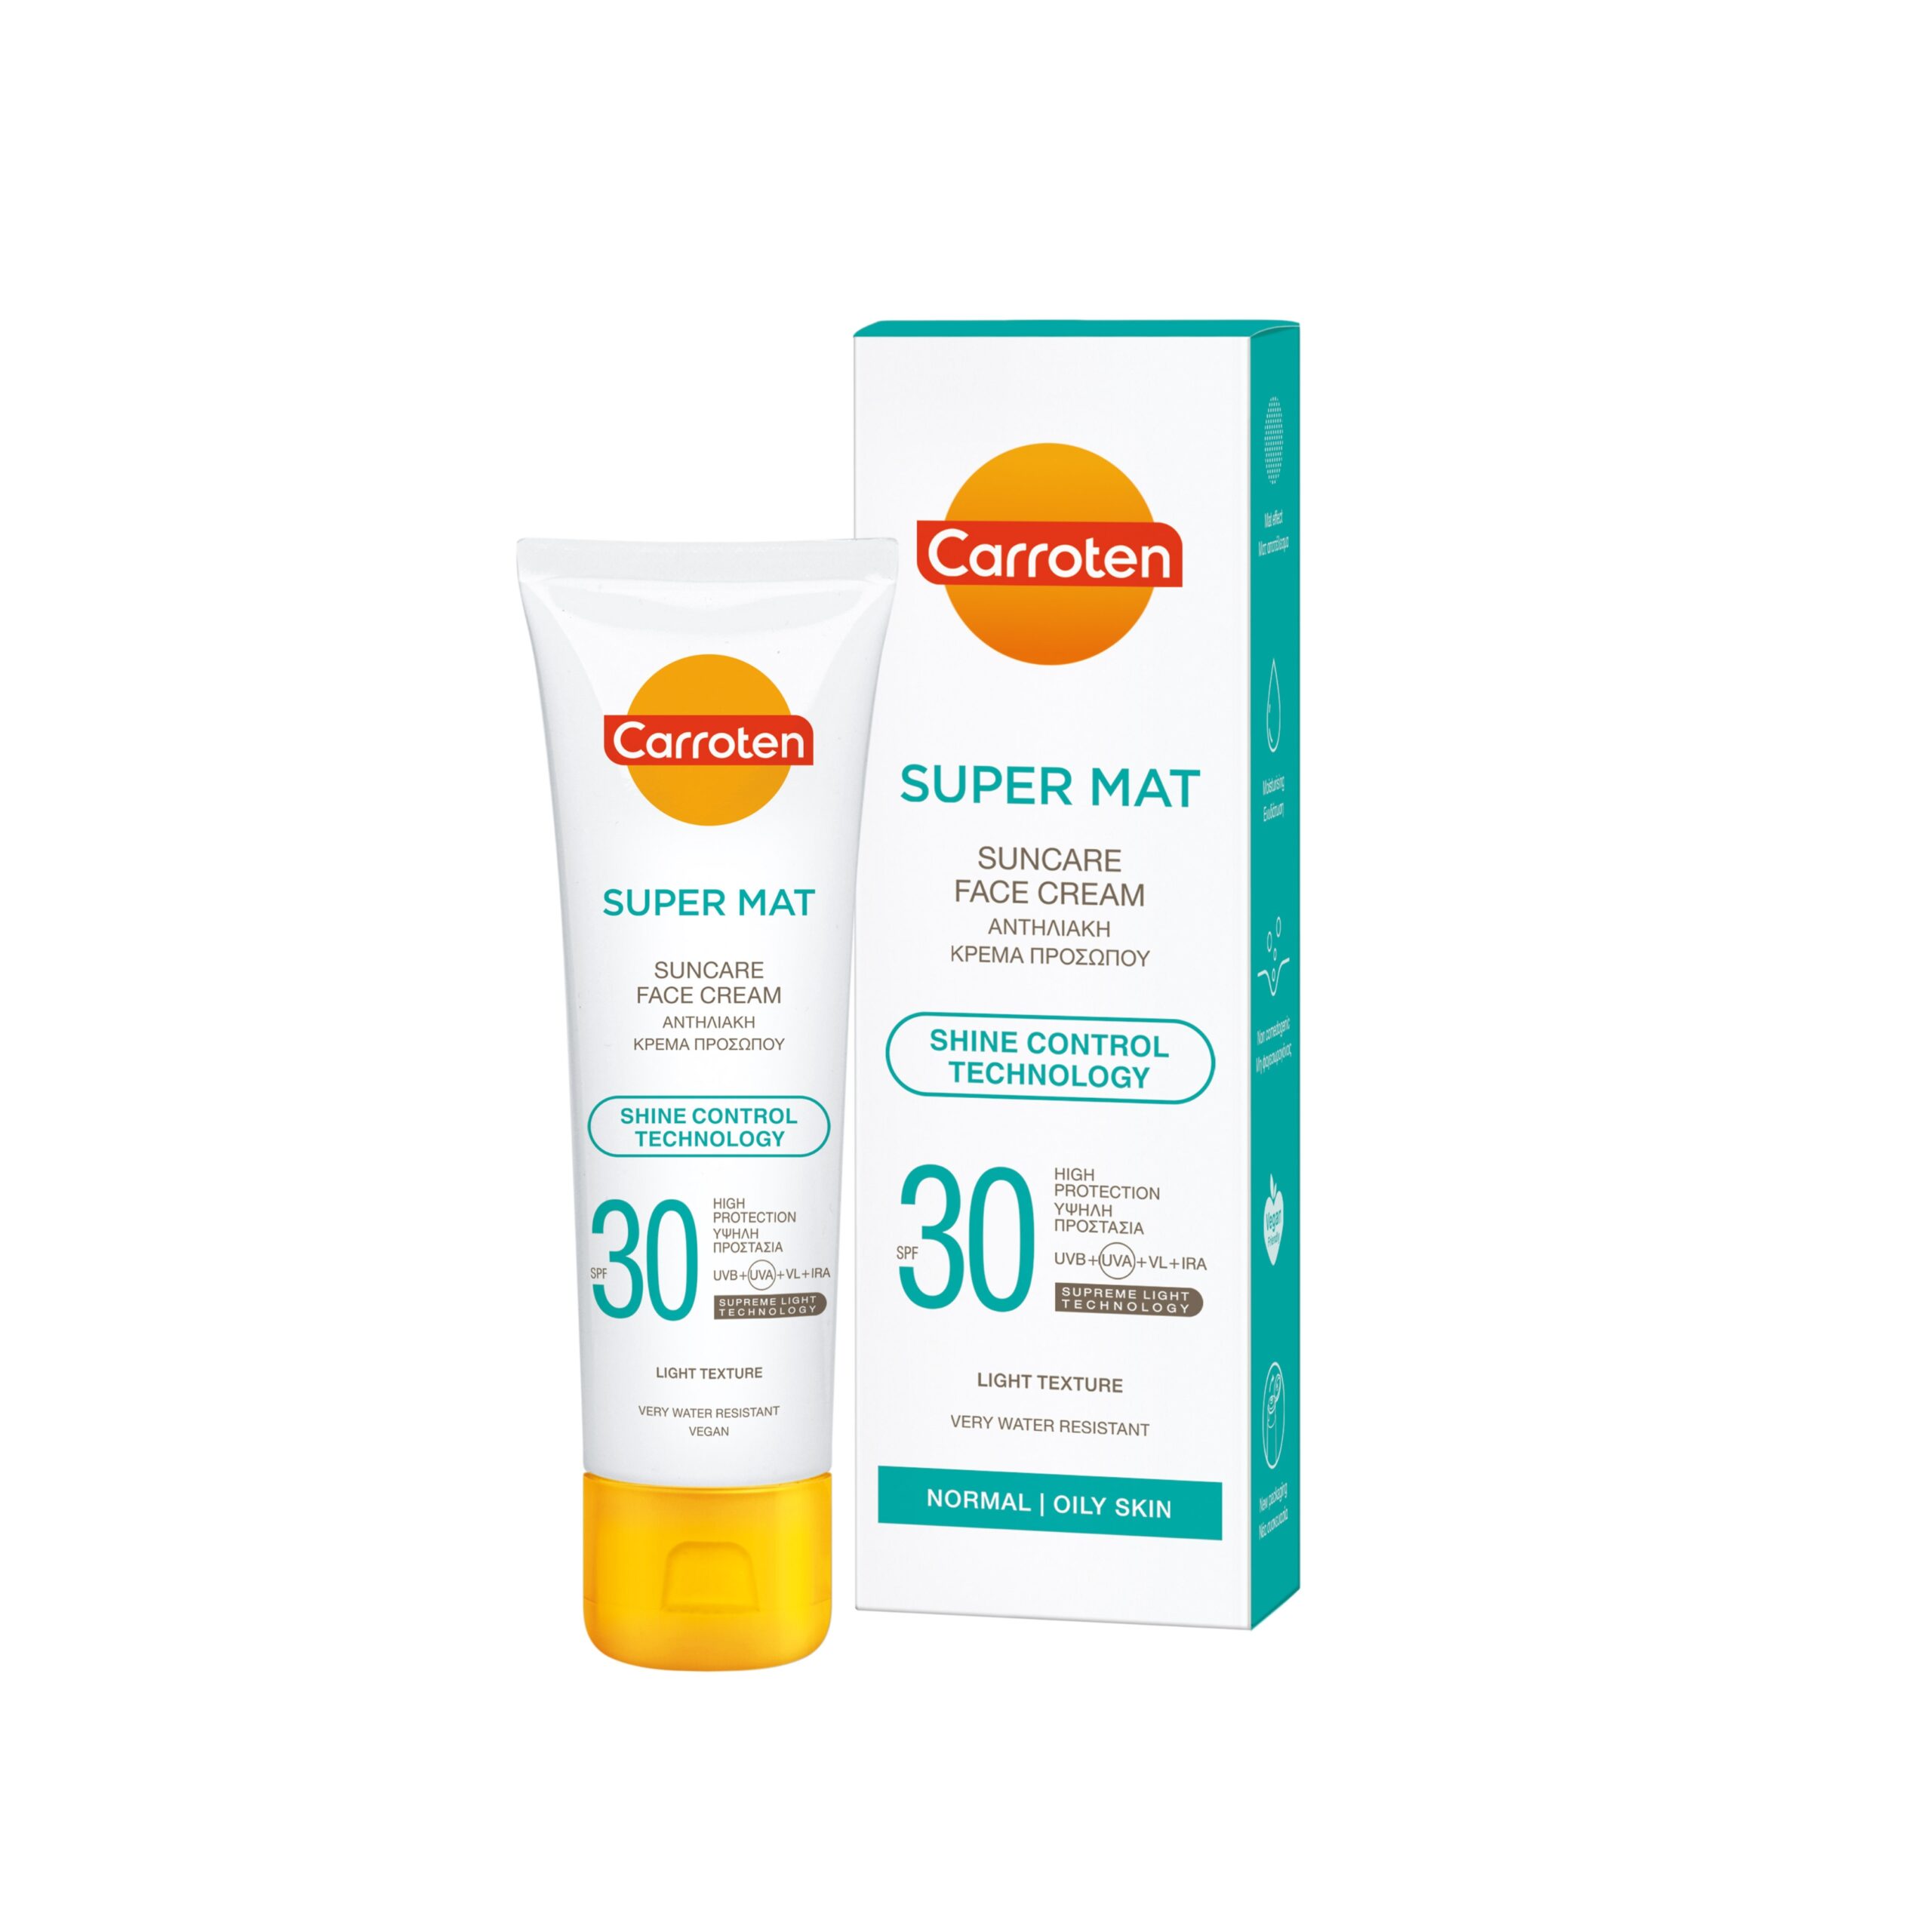 Carroten Super Mat Suncare Face Cream 50 ml – SPF30